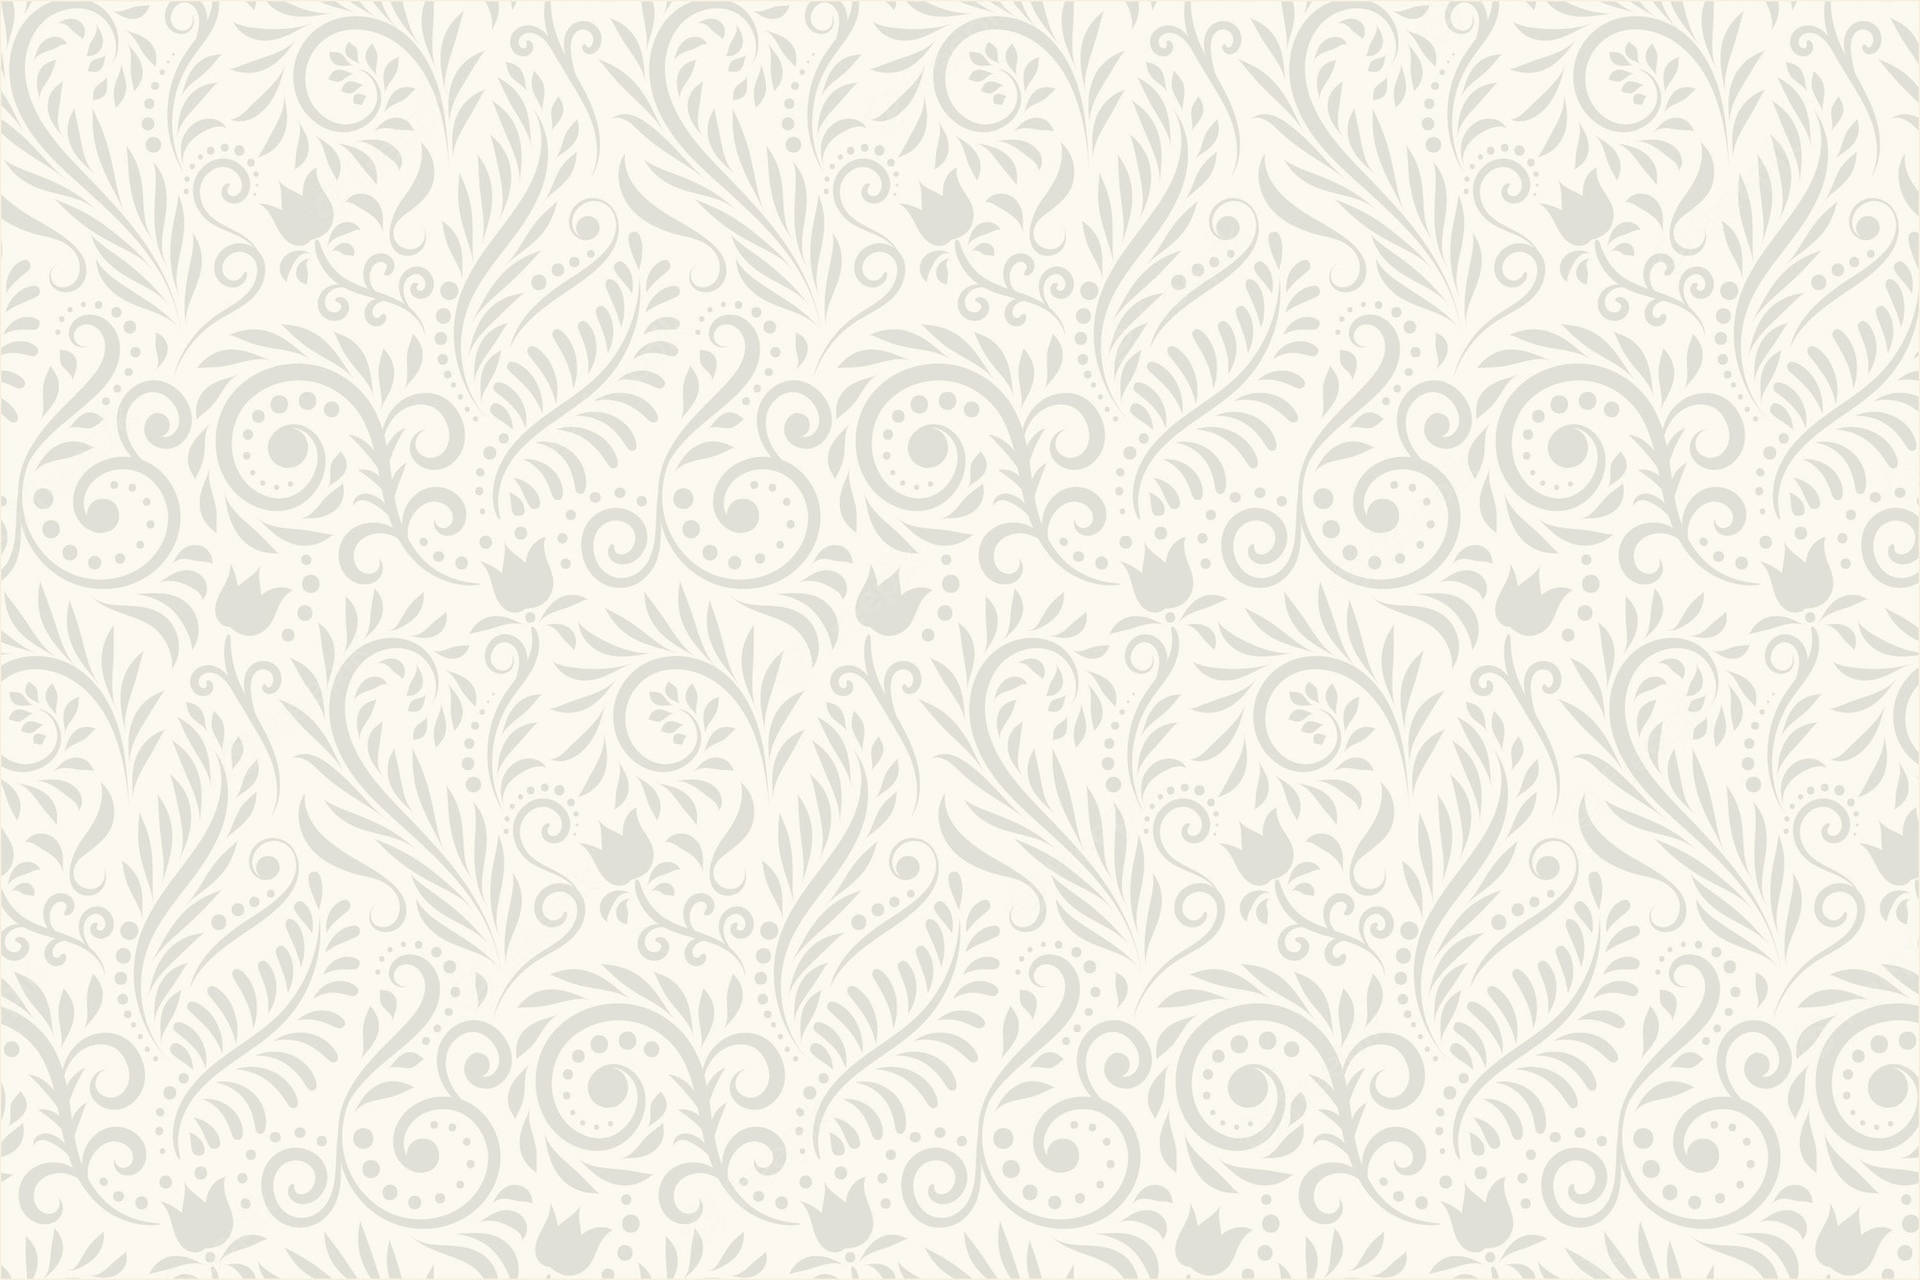 https://wallpapers.com/images/hd/flower-design-minimalist-floral-pattern-dxf7x53384ukbkoz.jpg